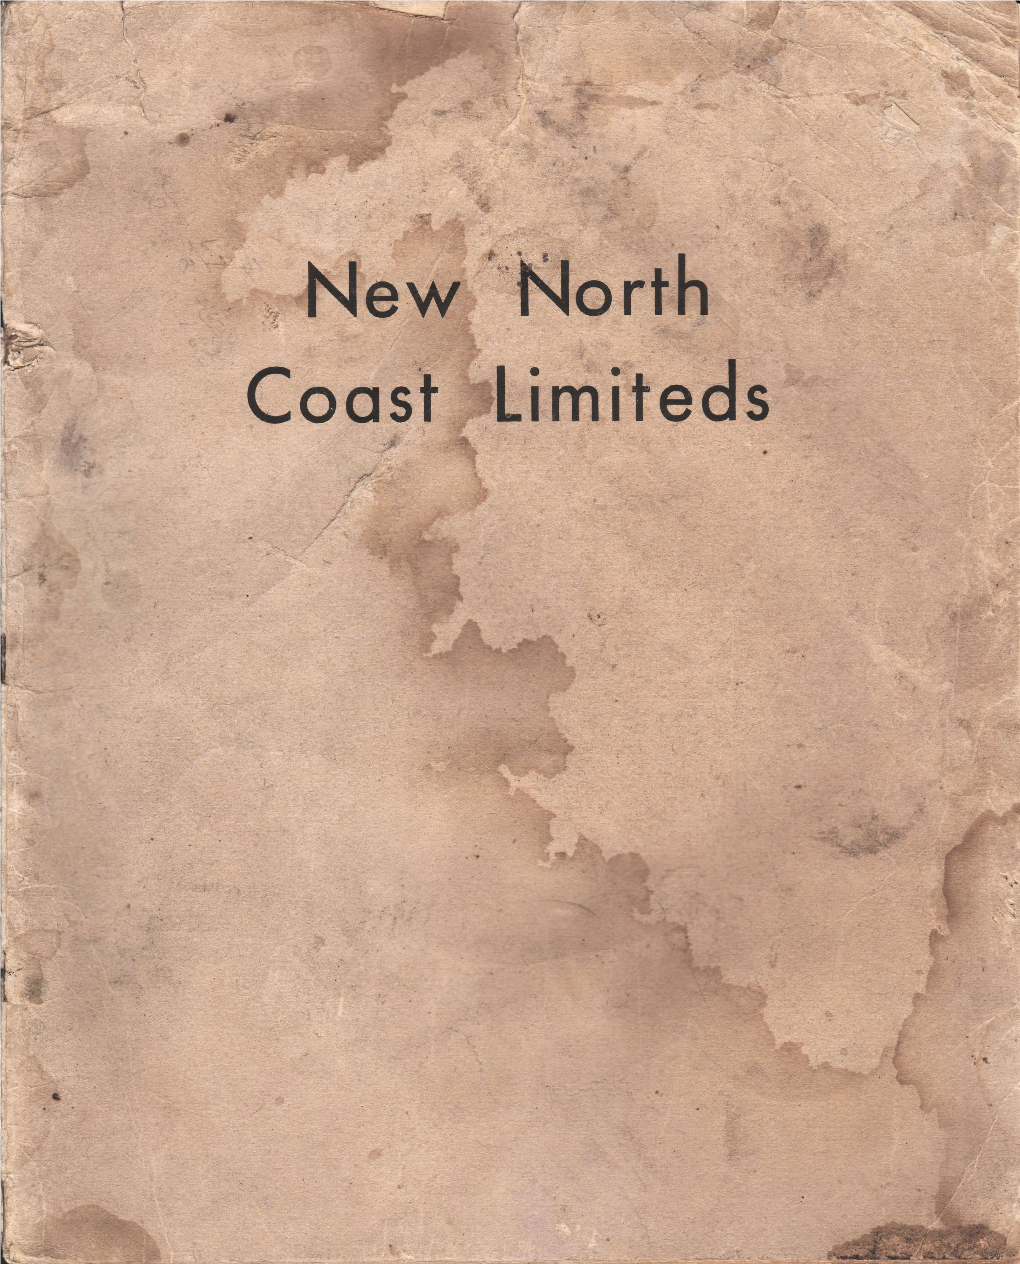 New North Coast Limiteds